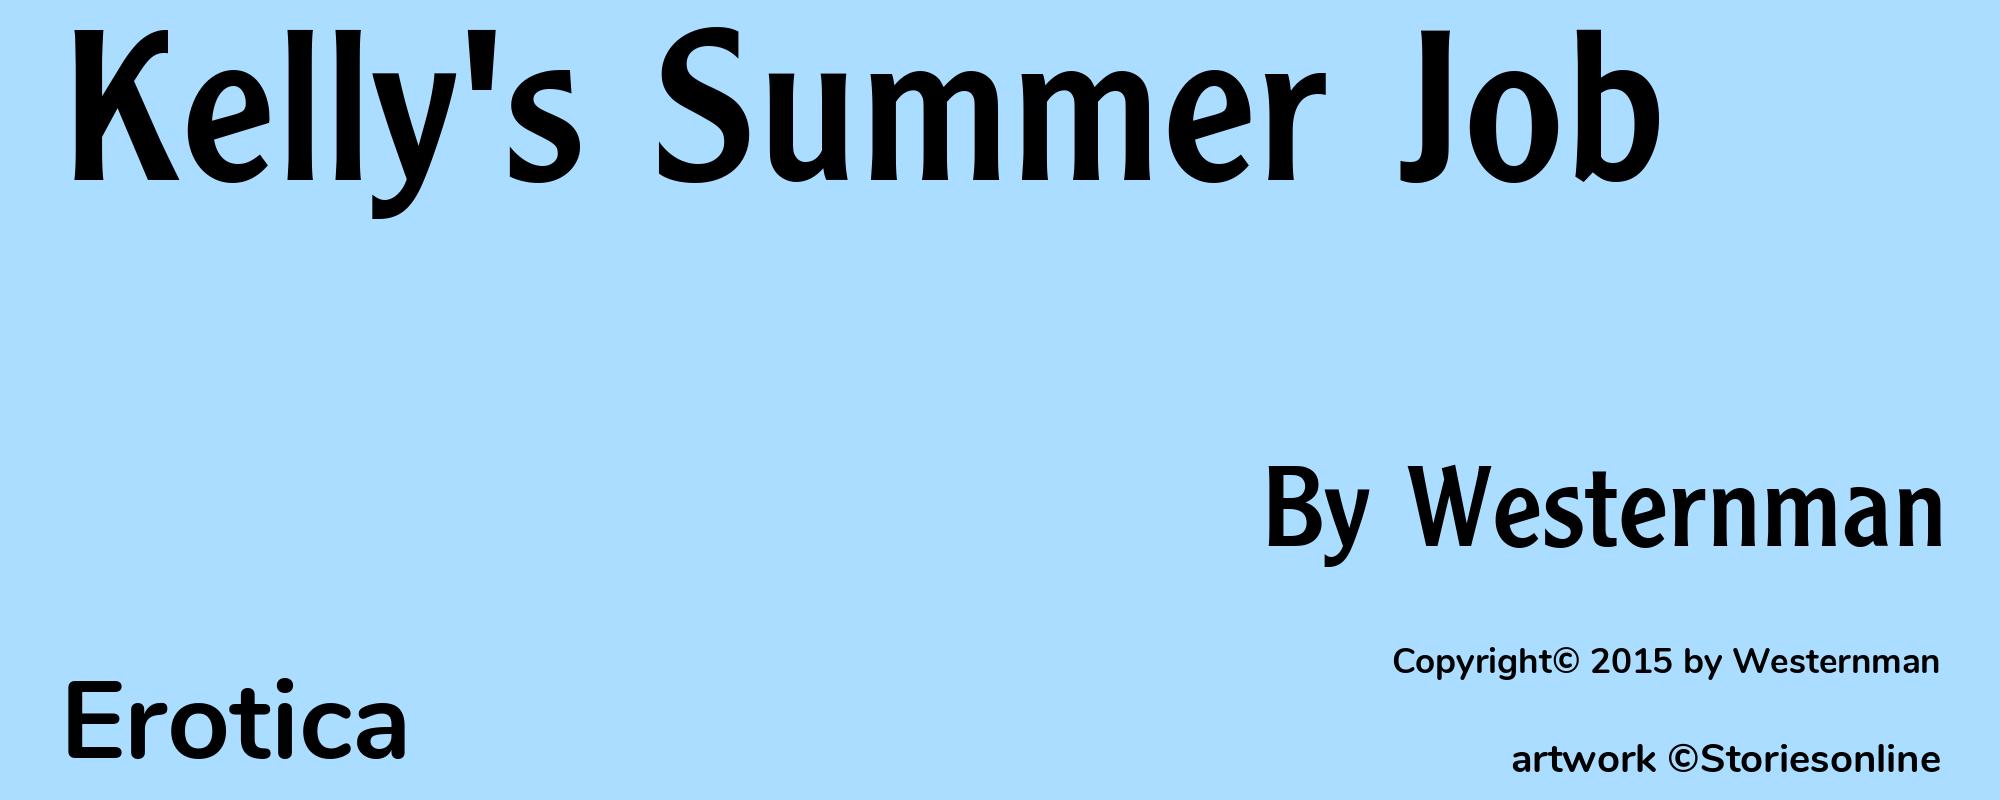 Kelly's Summer Job - Cover